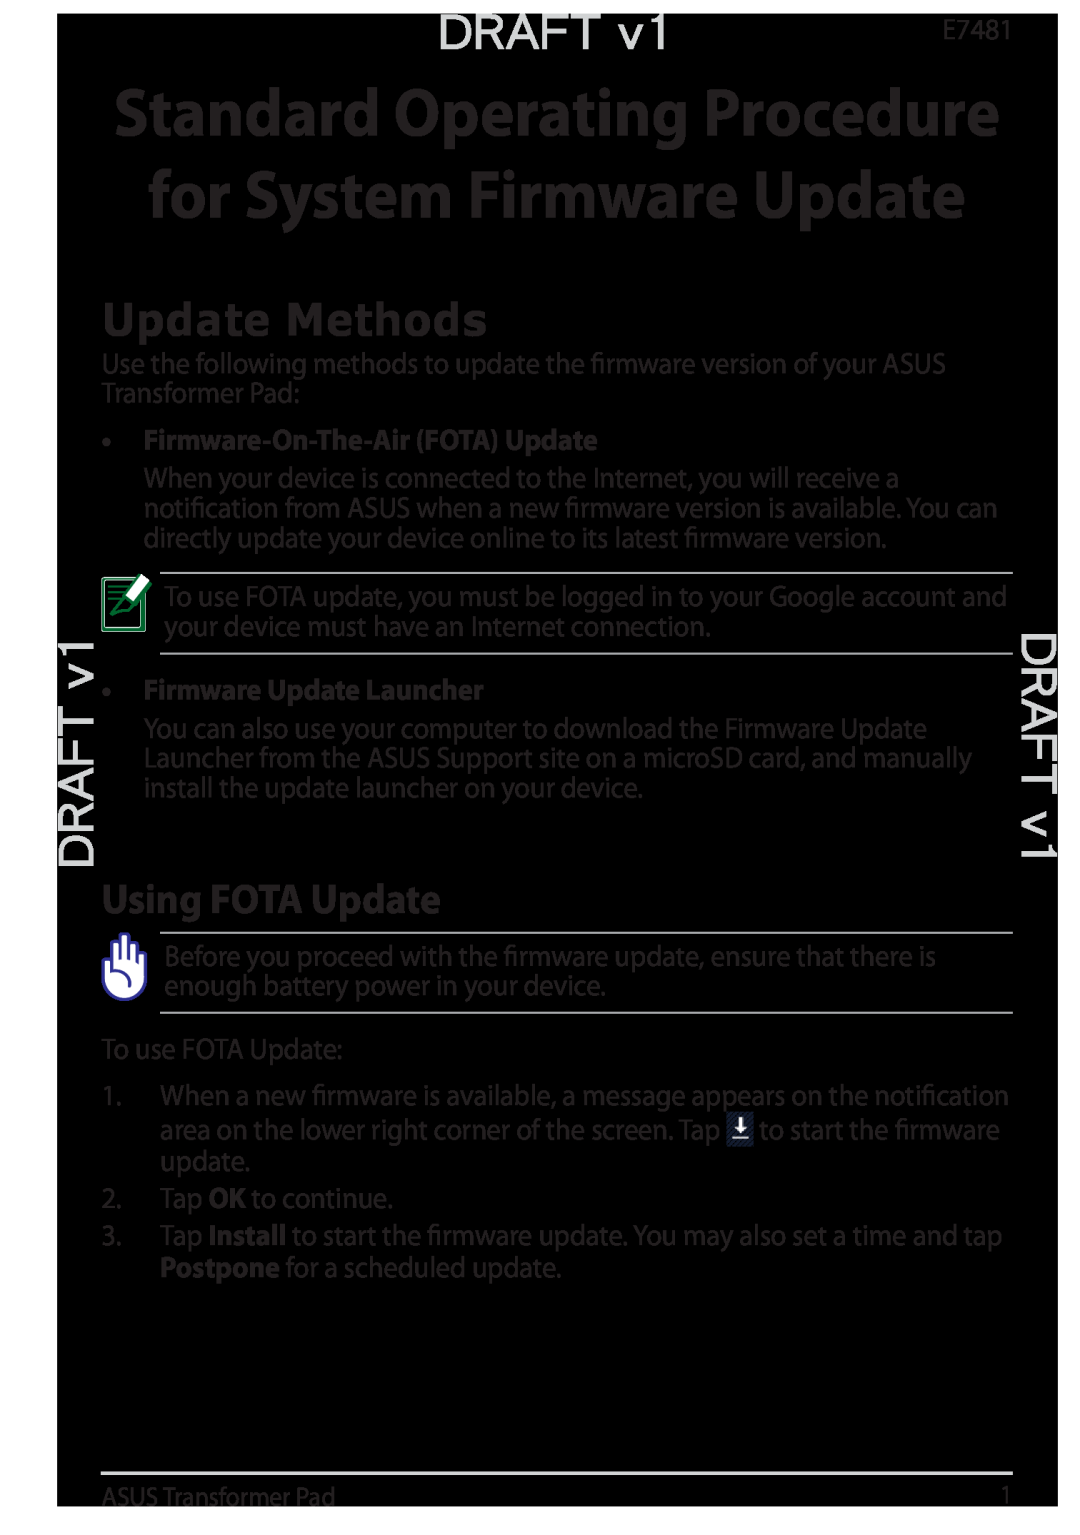 Asus T300LAXH71T, TF300TDOCKBL manual Draft, Using FOTA Update, Firmware-On-The-Air FOTA Update, Firmware Update Launcher 